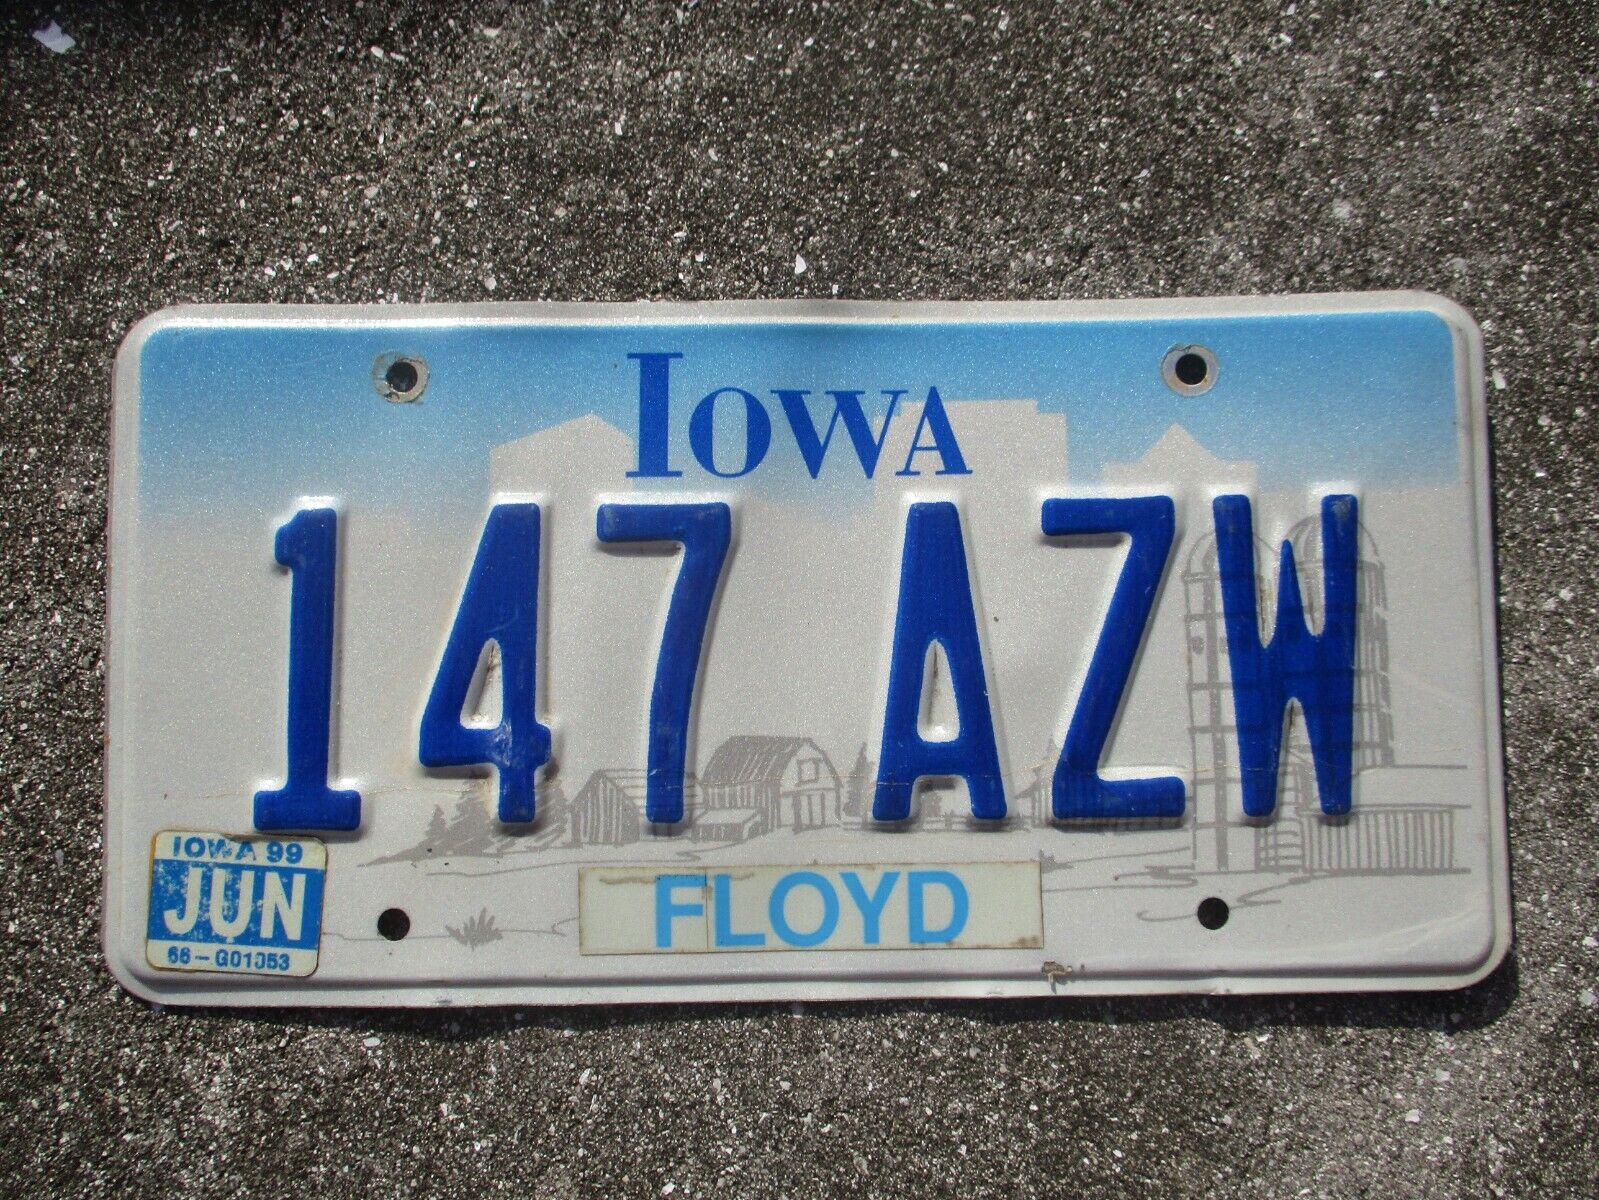 Iowa 1999 FLOYD co. license plate #    147 AZW